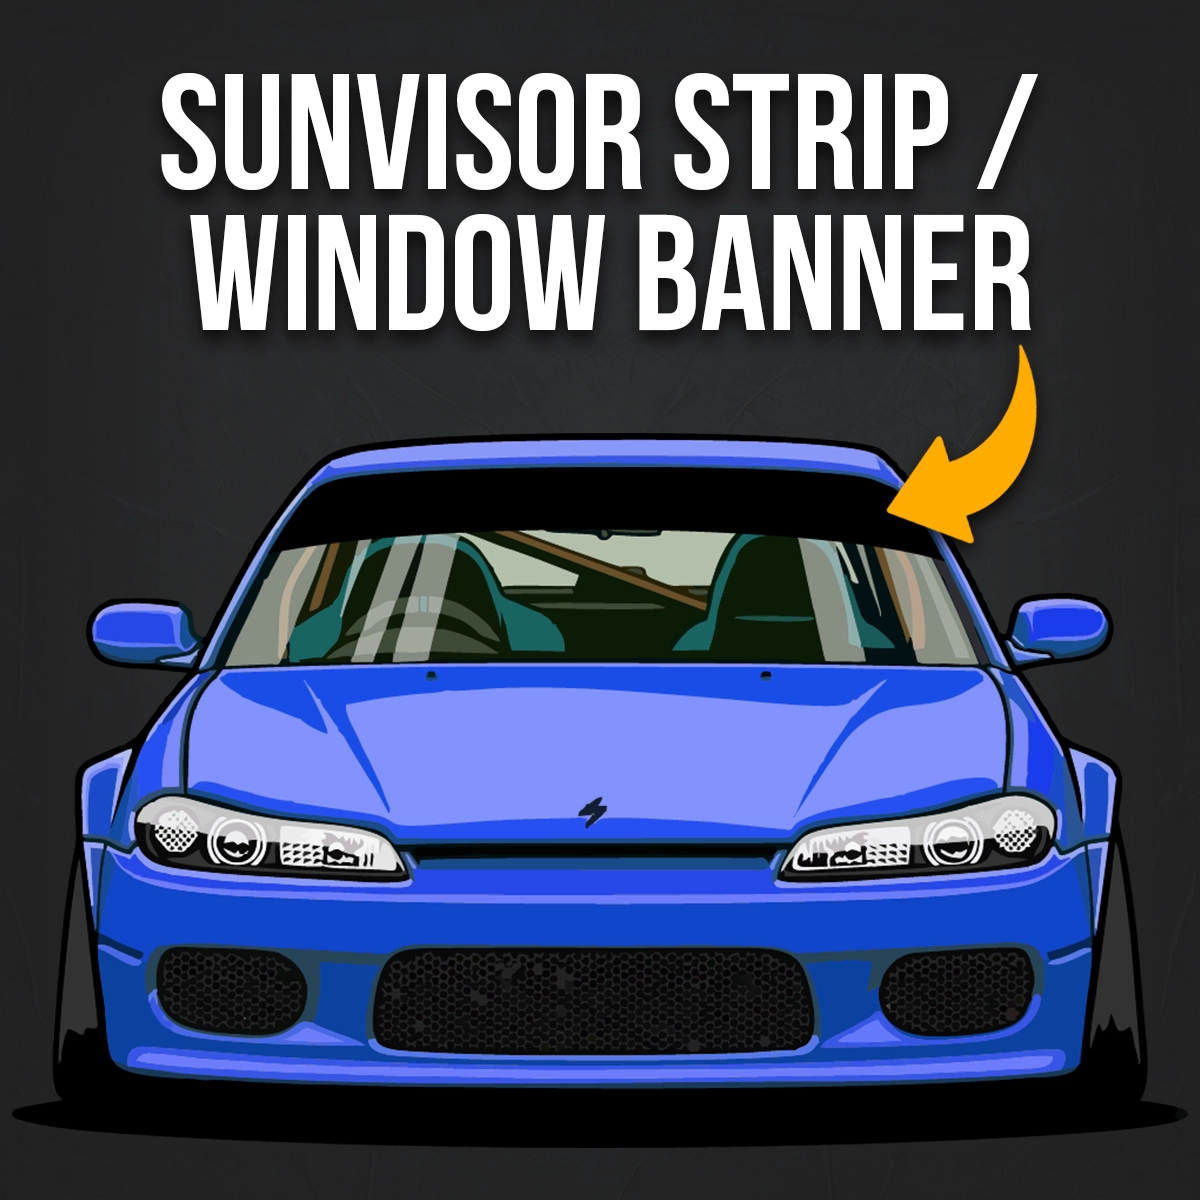 Sunvisor Strip / Window Banner Decal